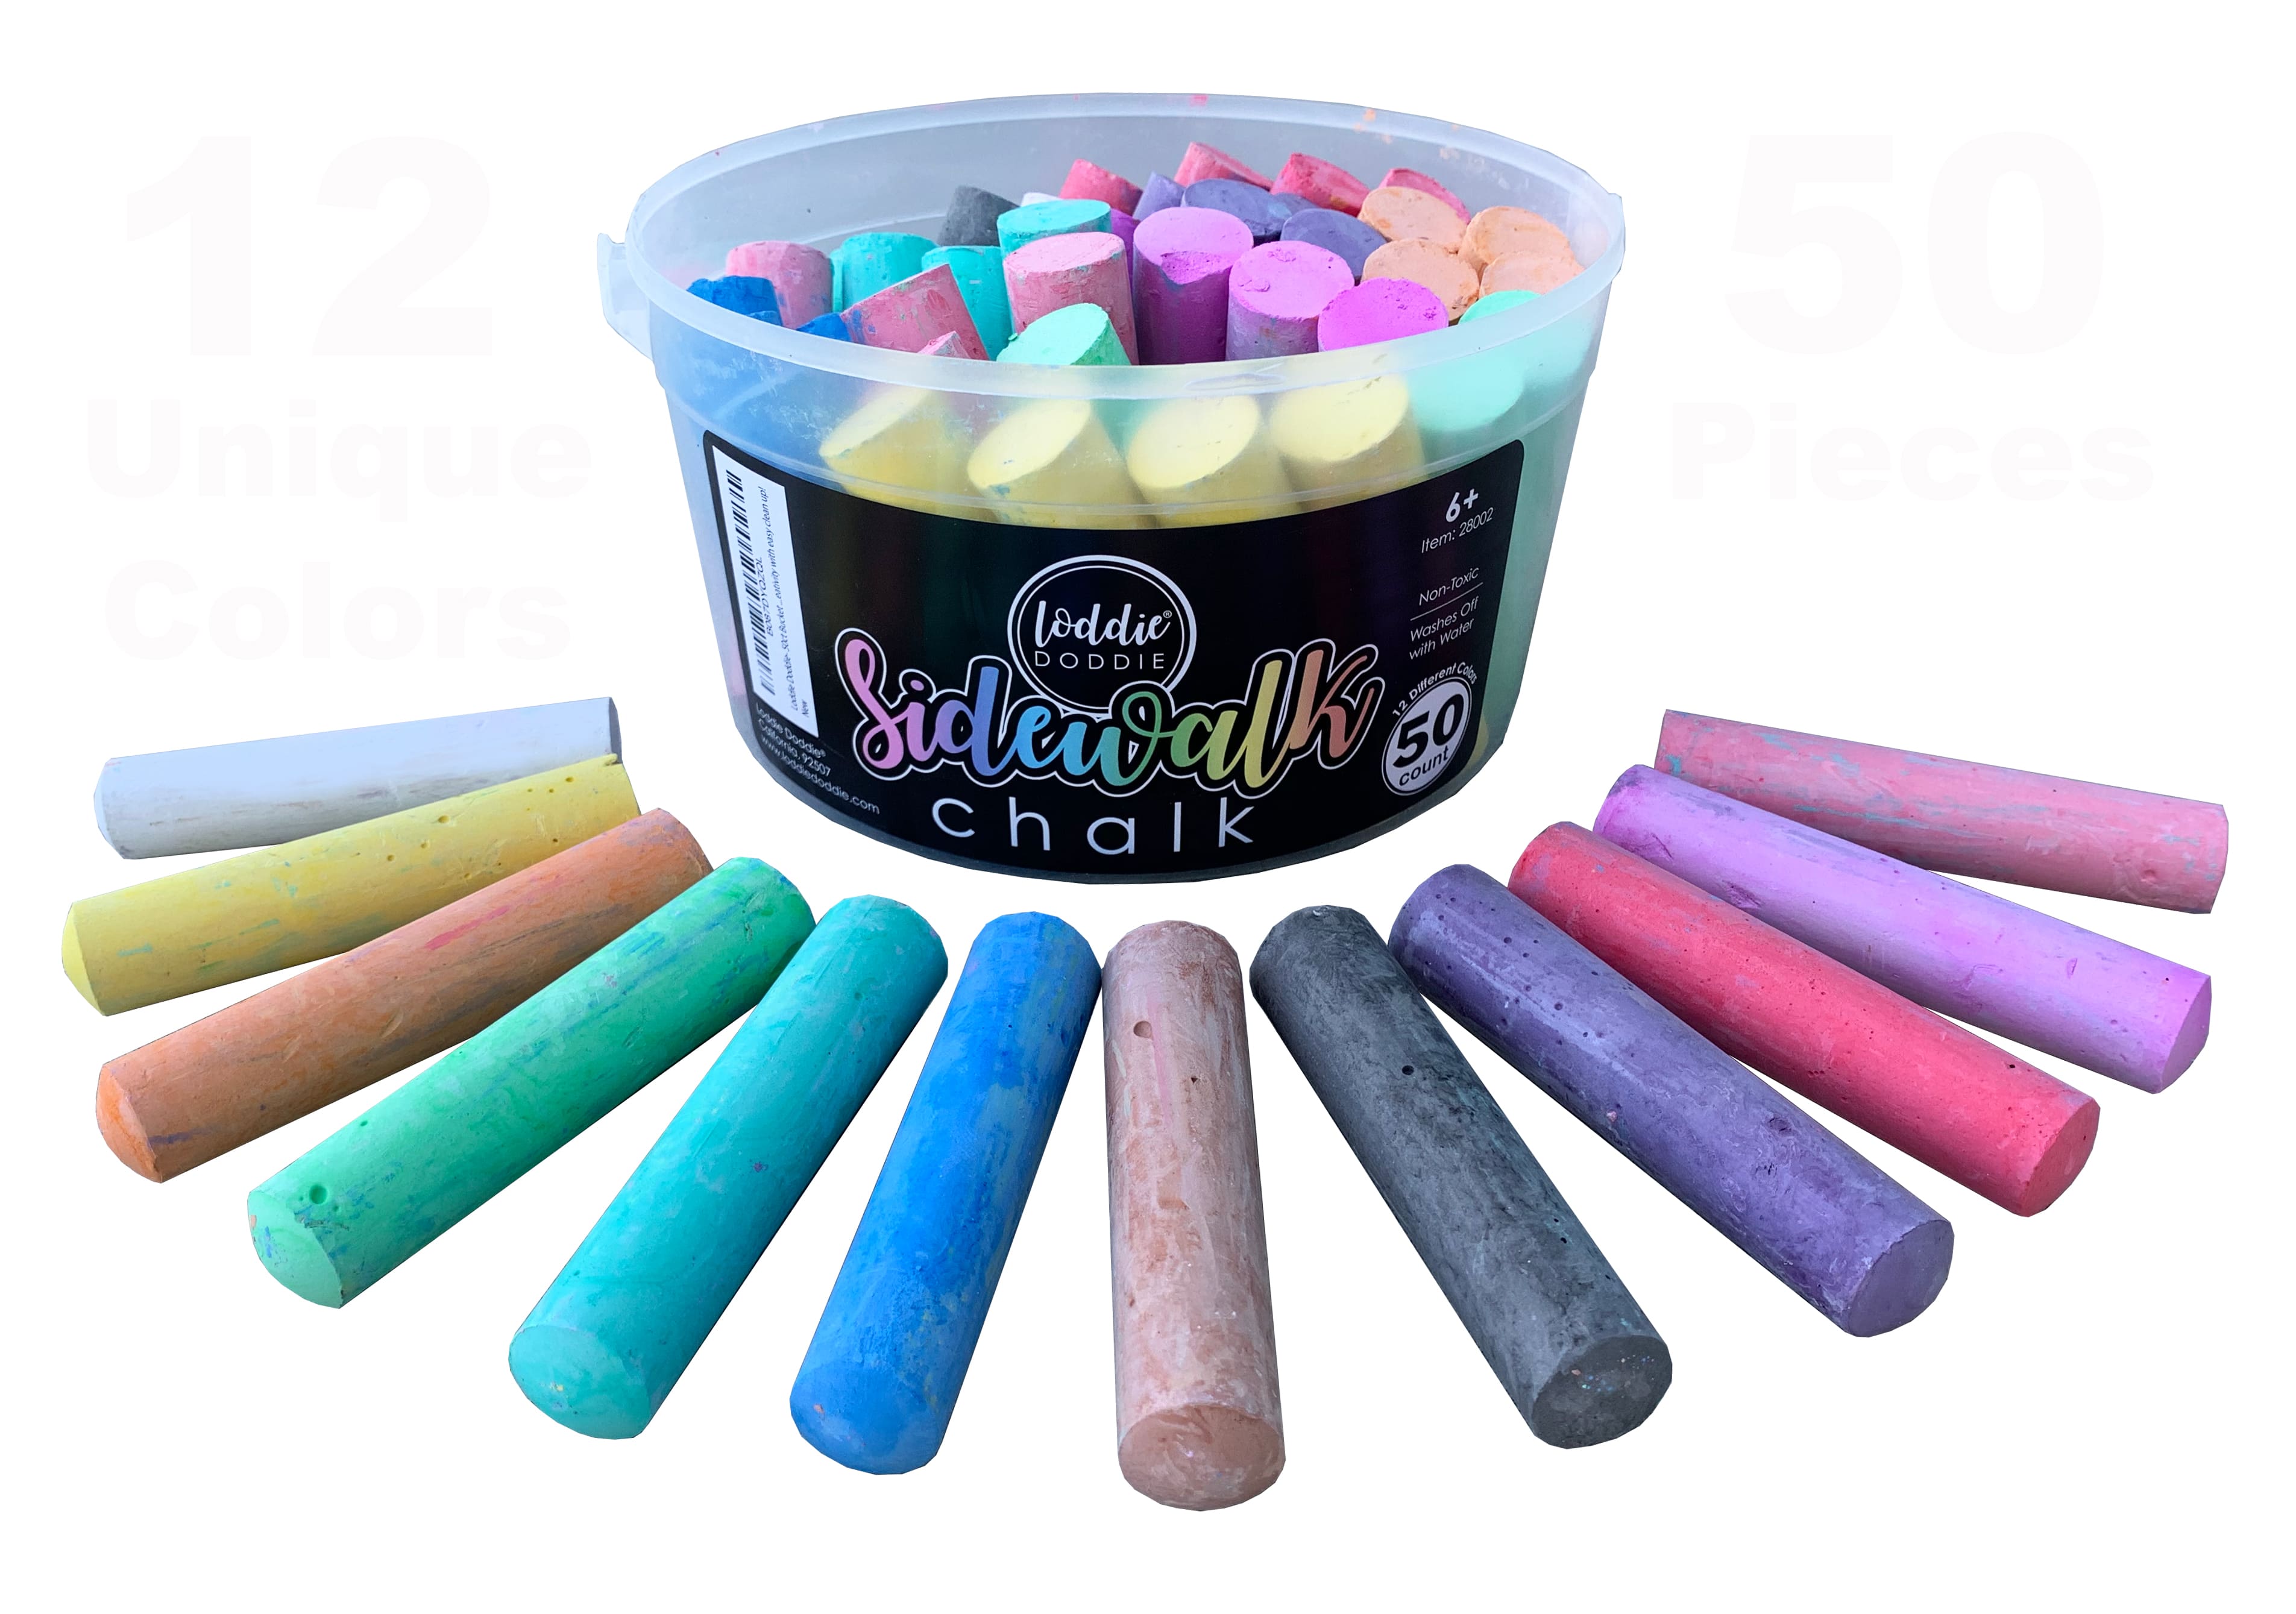 Multi-Color Jumbo Chalk Set-Wholesale Price-Bulk Purchase